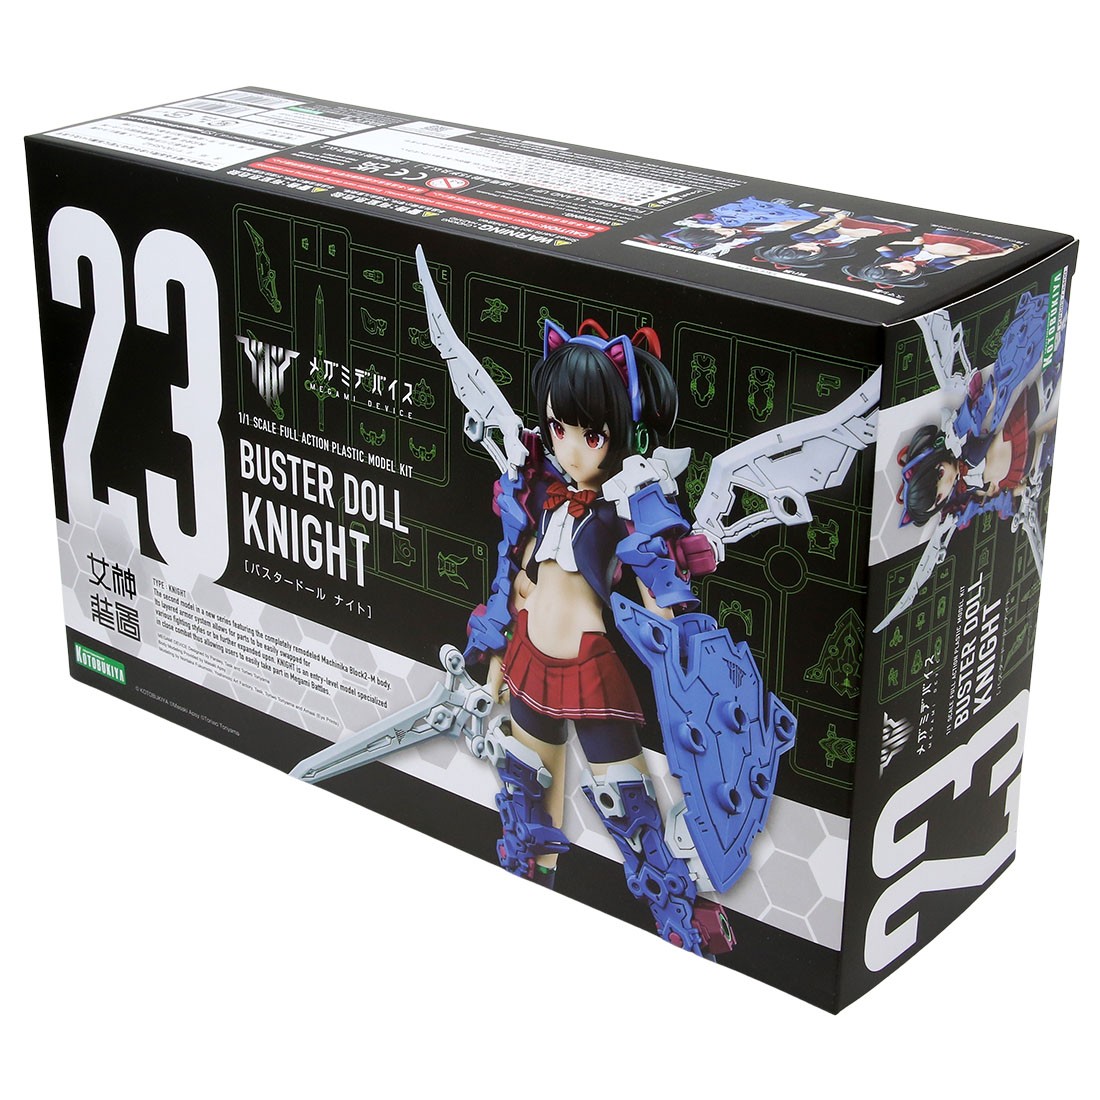 Kotobukiya Megami Device Buster Doll Knight Plastic Model Kit (blue)